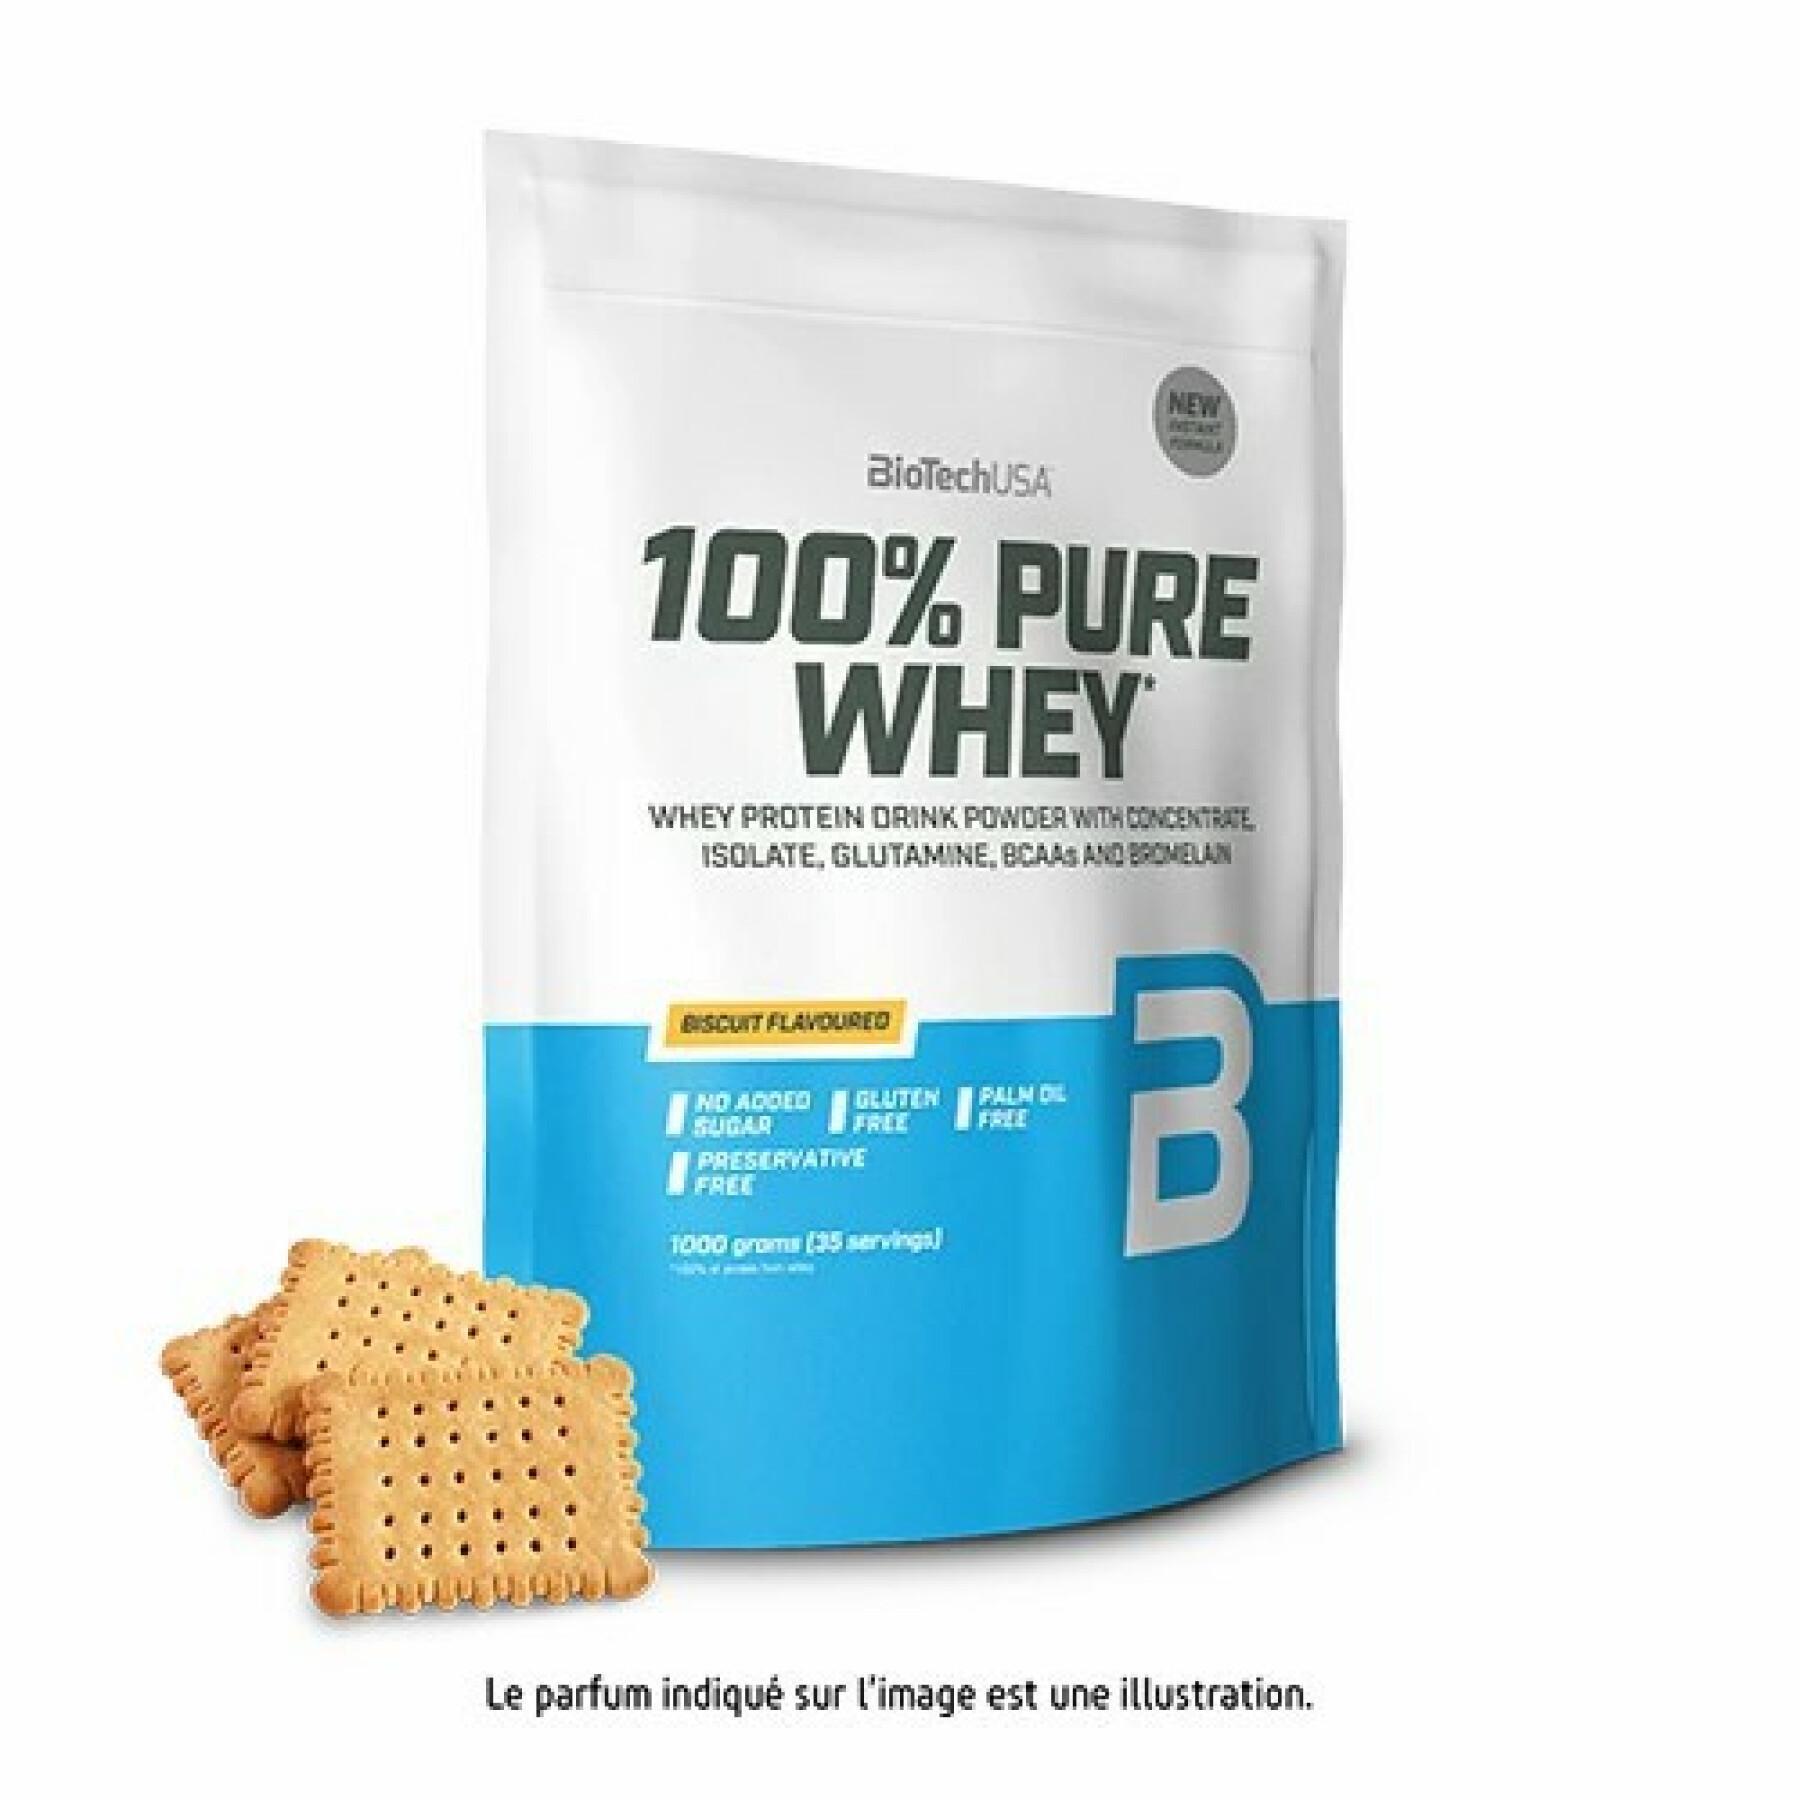 Pak van 10 zakken 100% zuivere wei-eiwitten Biotech USA - Biscuit - 1kg